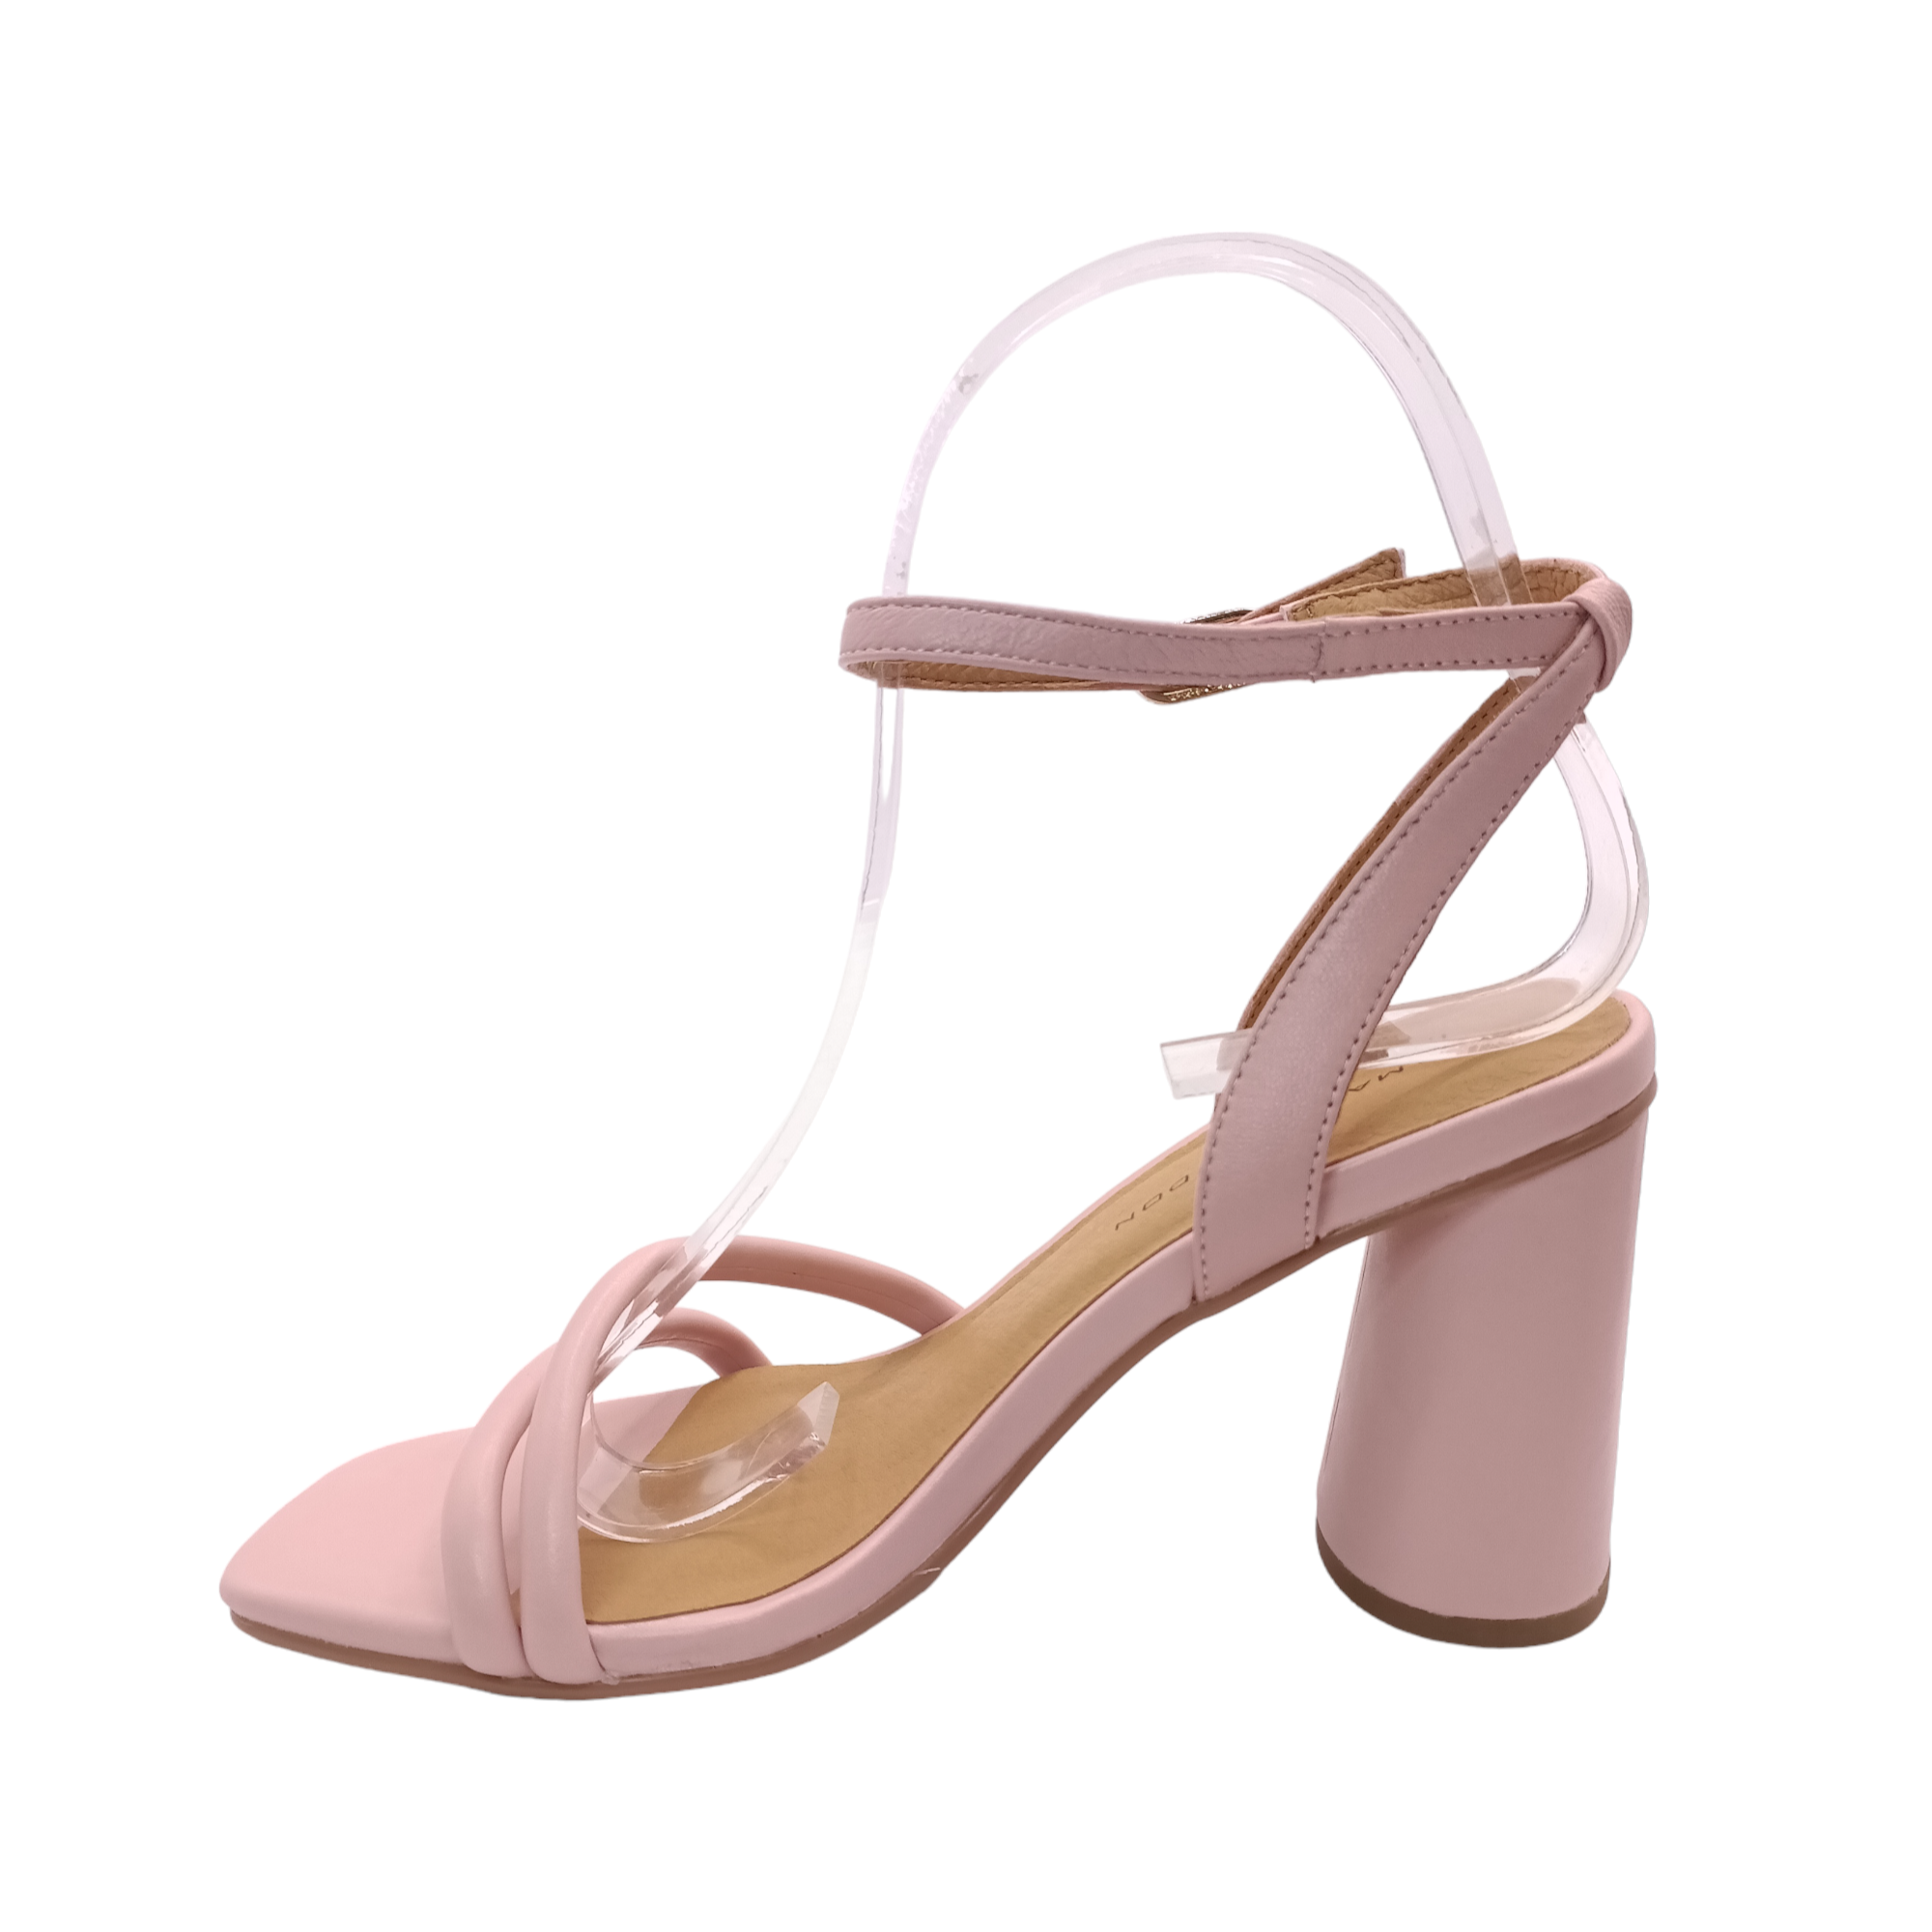 Blayke - shoe&me - Tamara - Sandal - Heels, Sandals, Summer, Womens